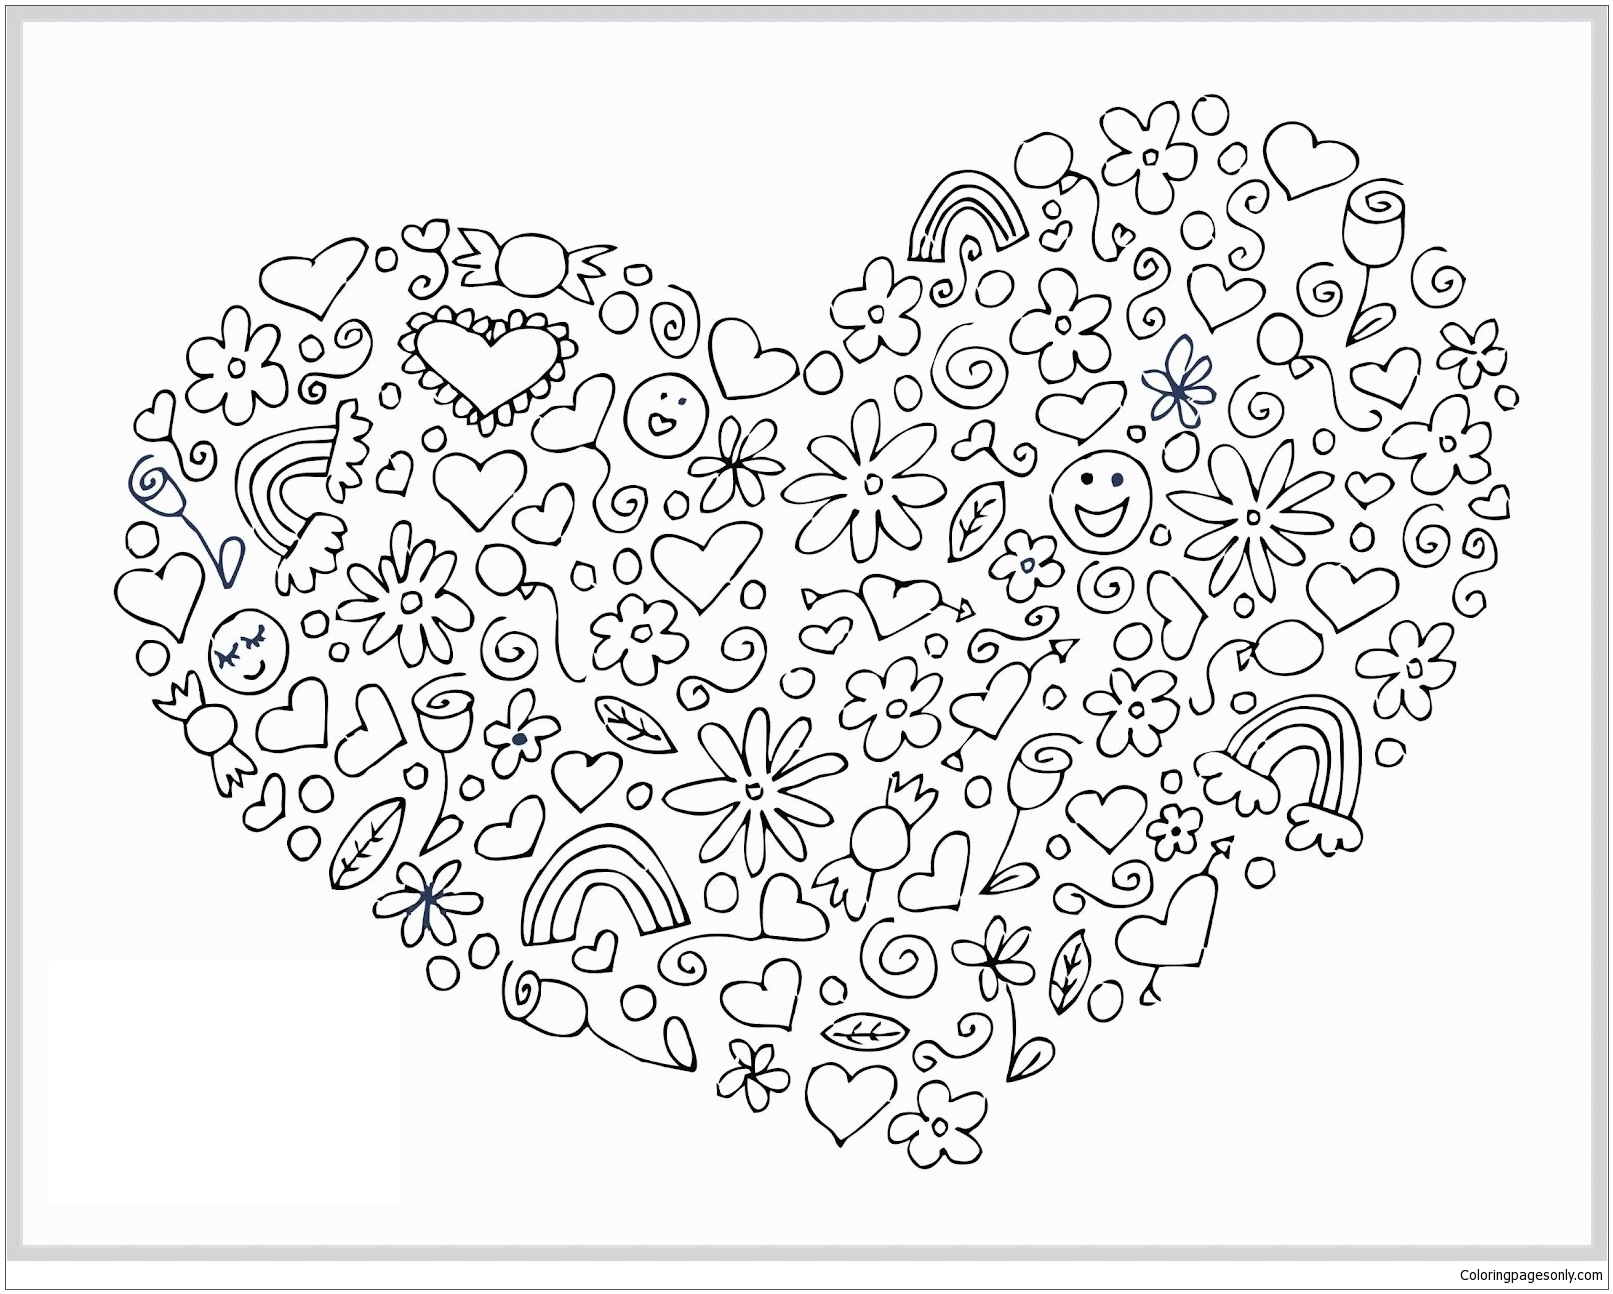 Mandala Heart Coloring Pages - Mandala Coloring Pages - Coloring Pages